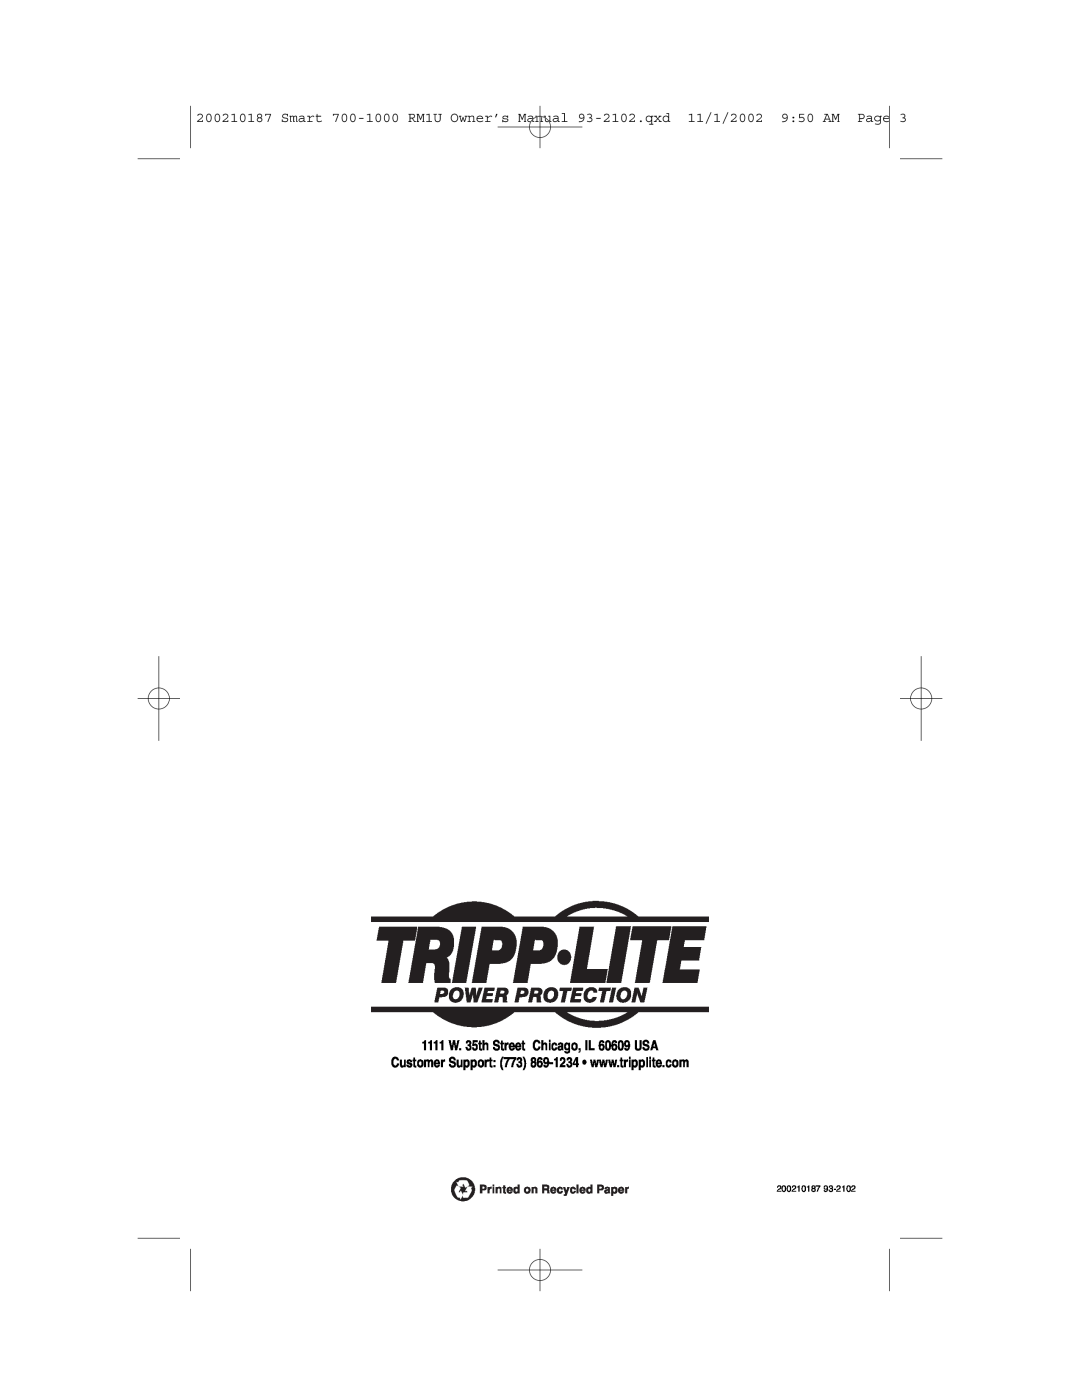 Tripp Lite 1000 VA owner manual 1111 W. 35th Street Chicago, IL 60609 USA, 200210187 